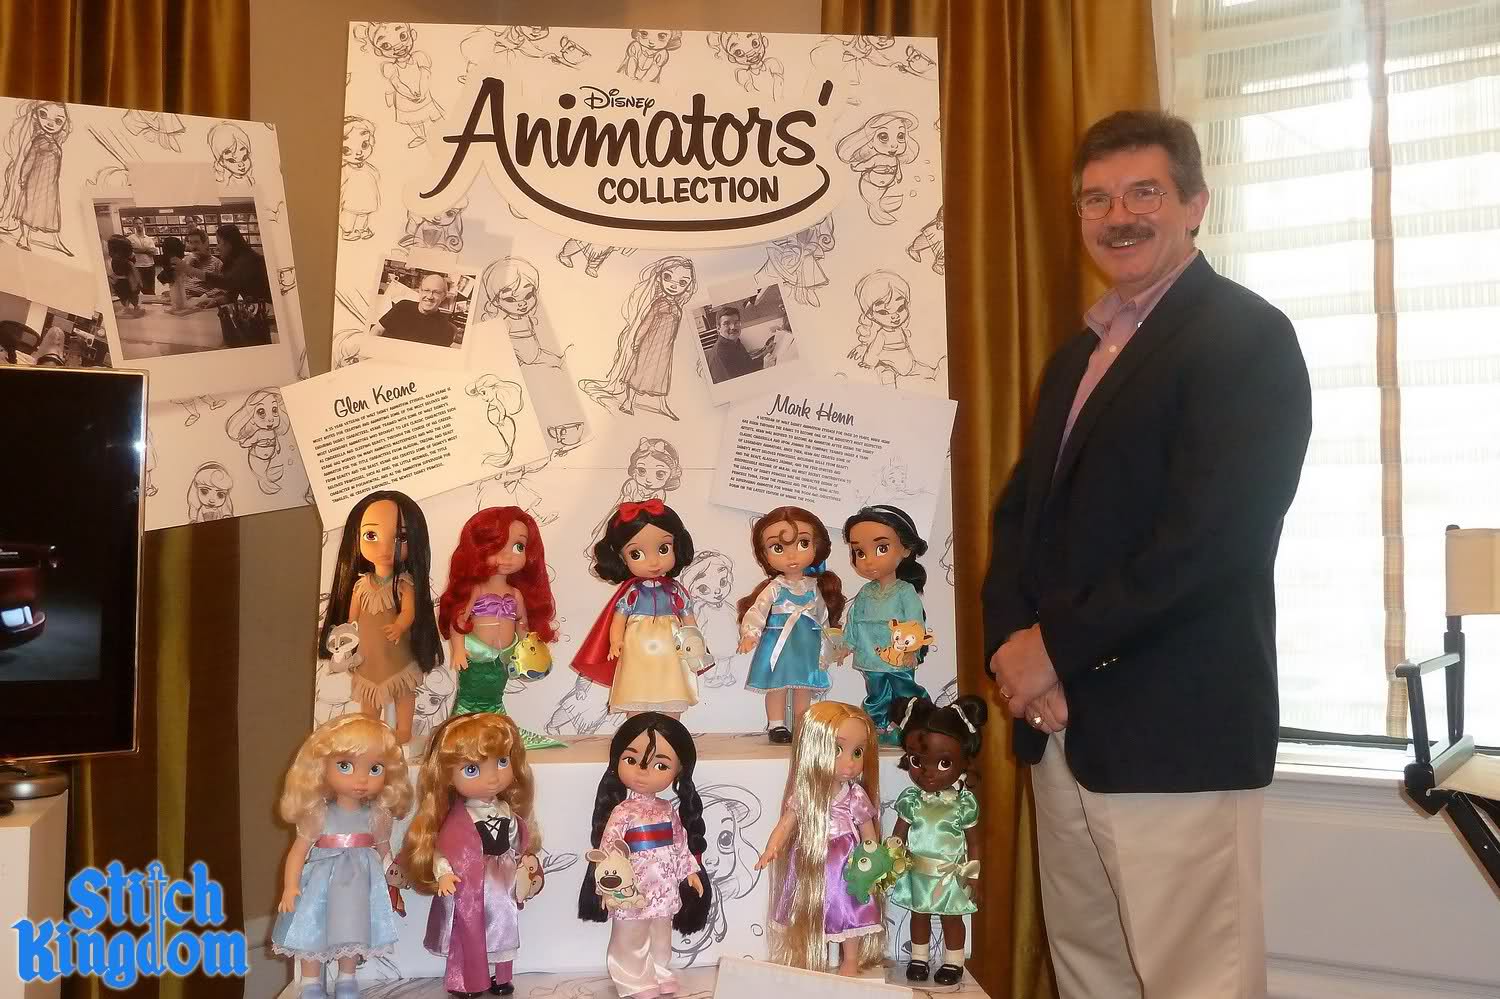 Dolls, Disney Princesses, Animator Dolls & More